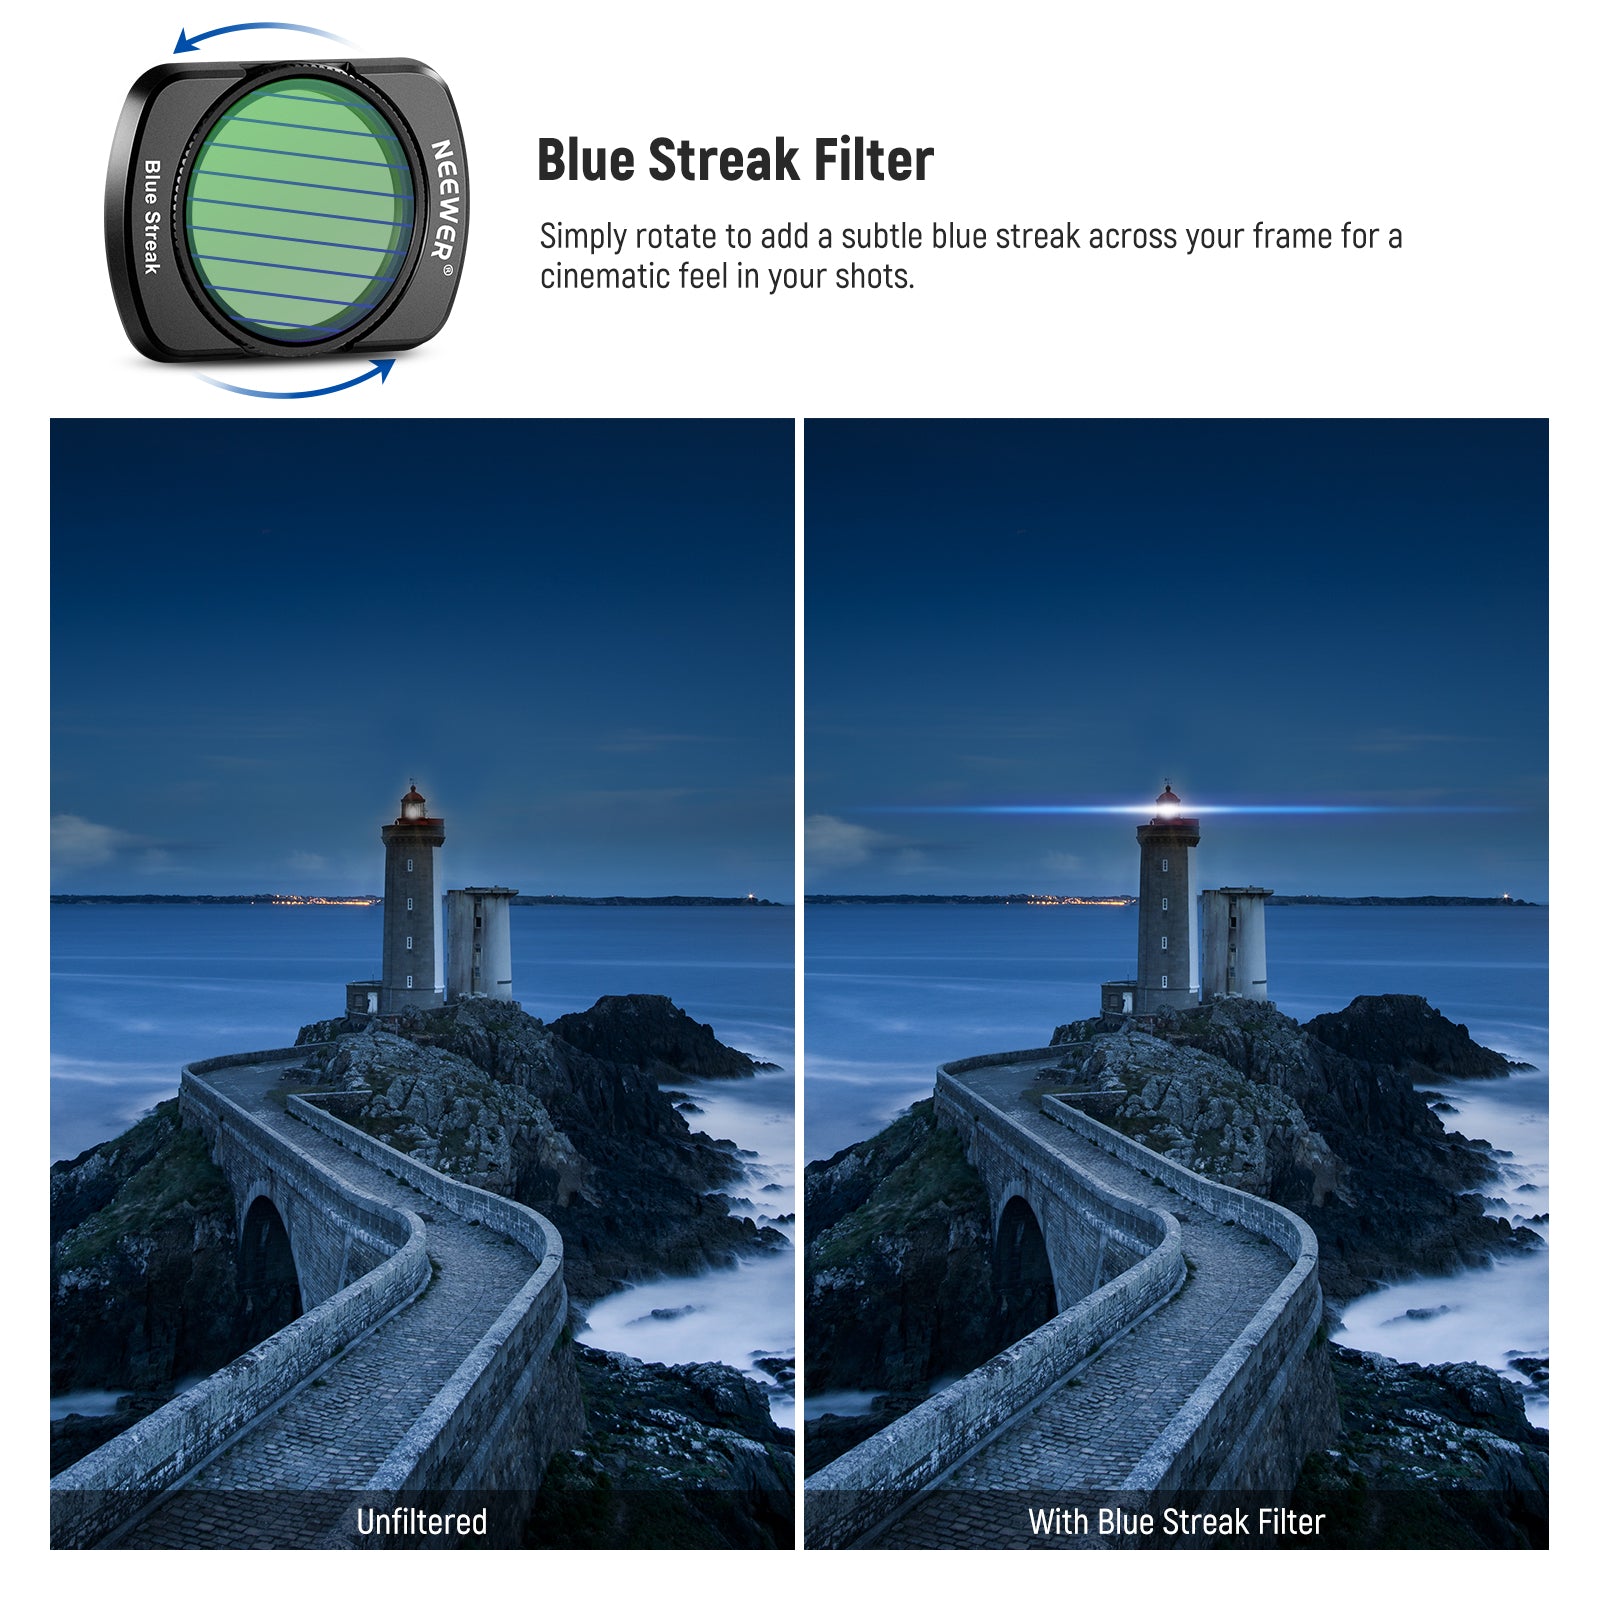 Blue Streak Filter Test